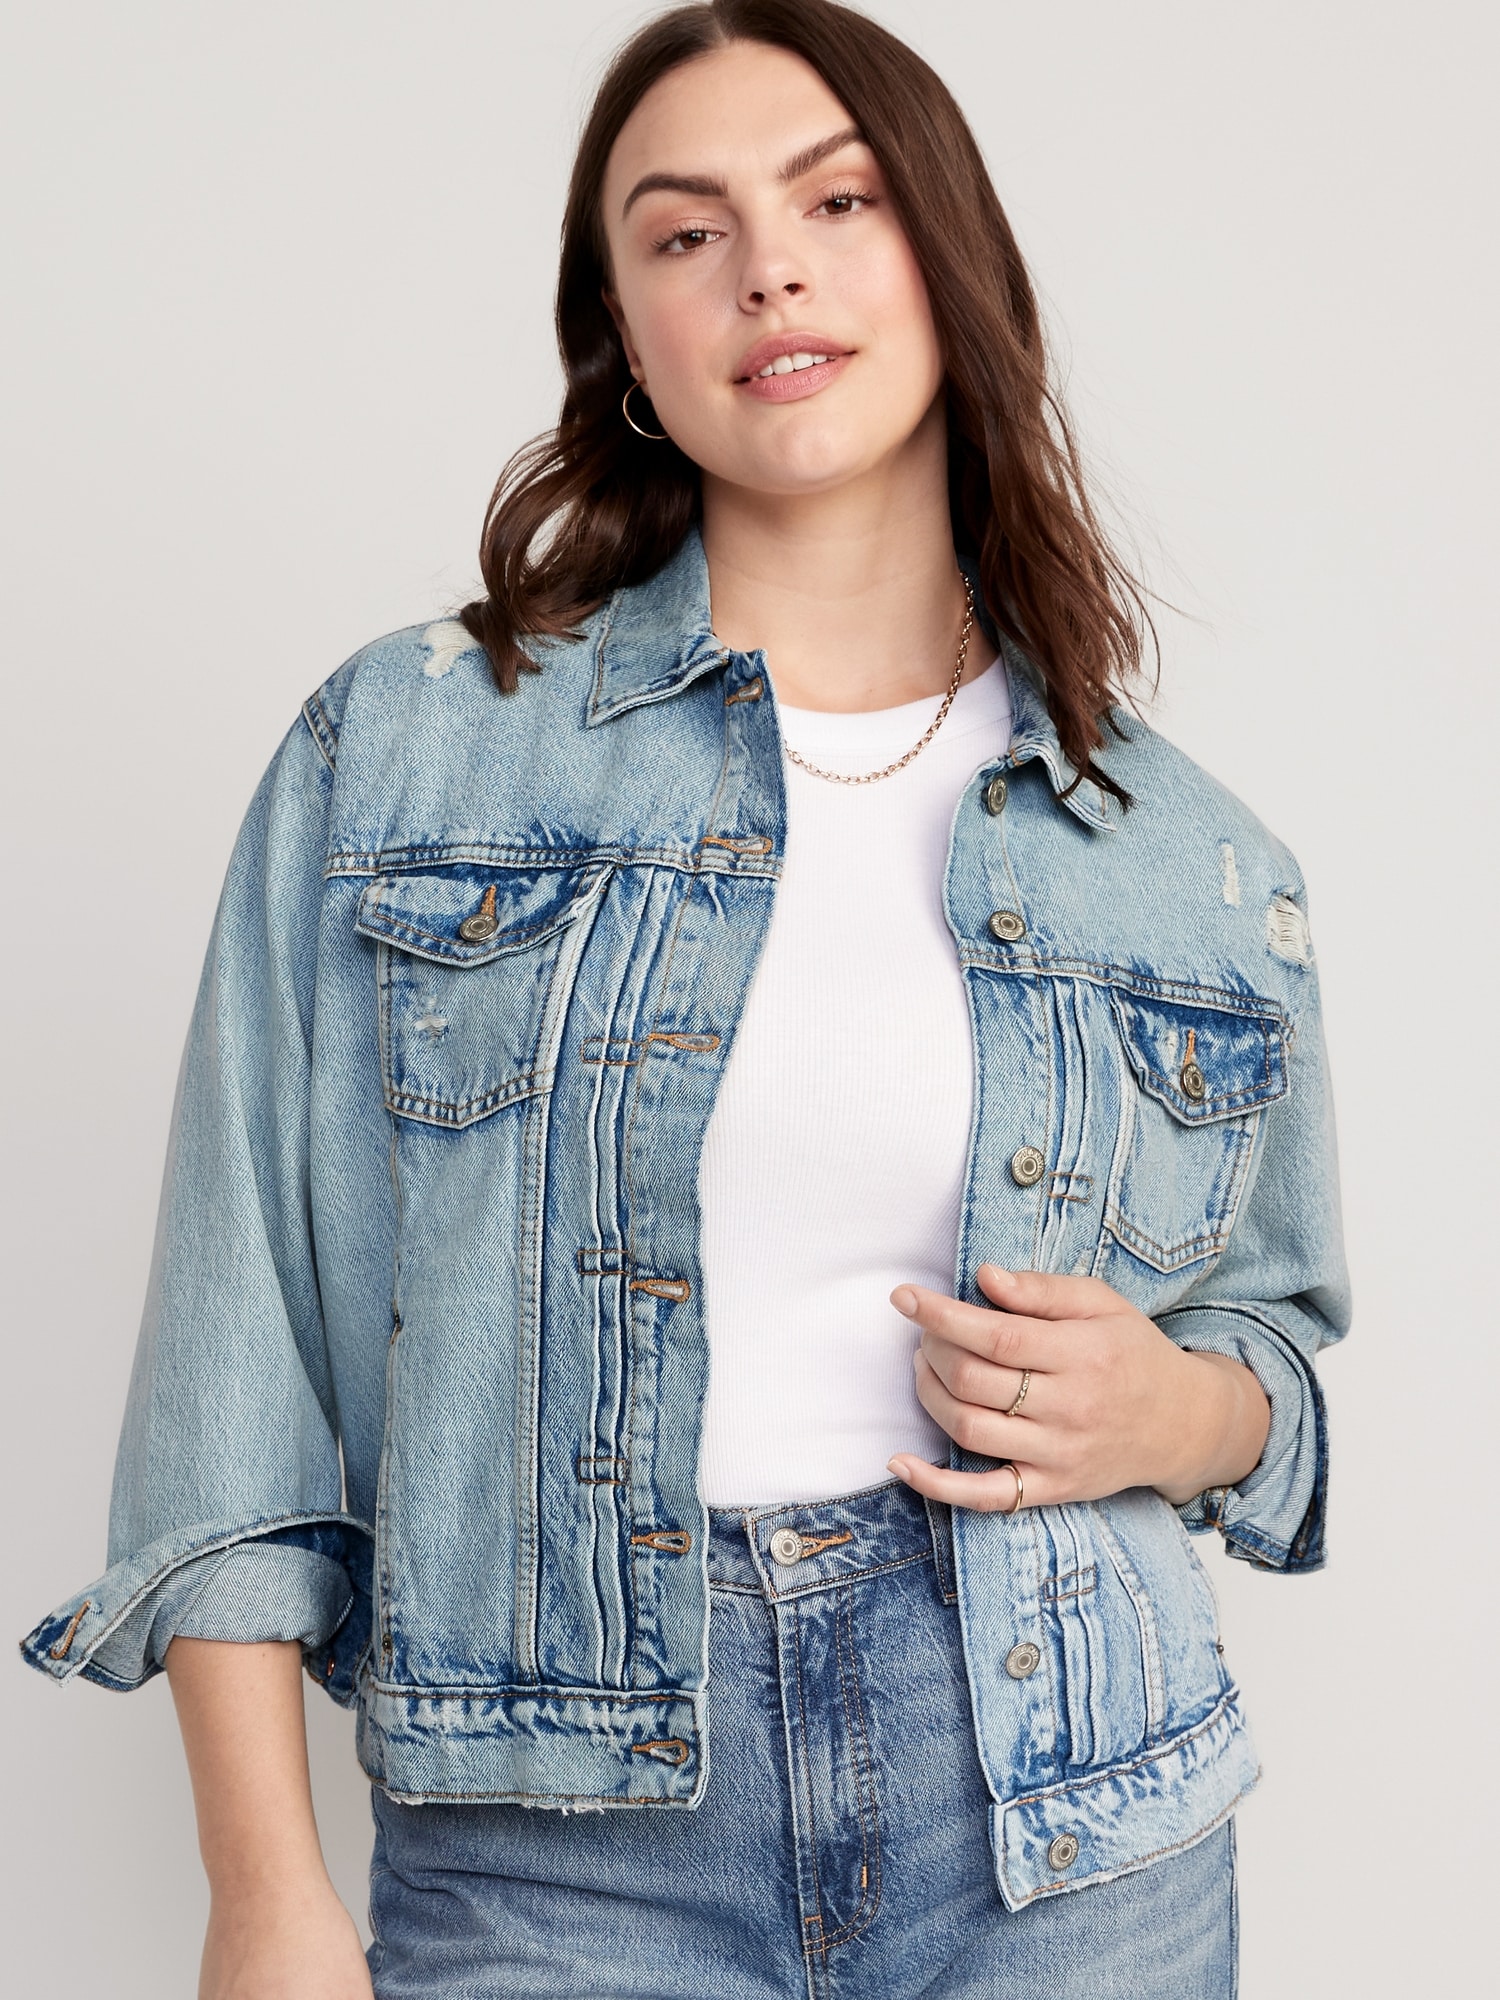 Buy LifeShe Women's Basic Long Sleeve Button Down Distressed Denim Jackets  Jean Jacket Coat, Light Blue, Medium at Amazon.in